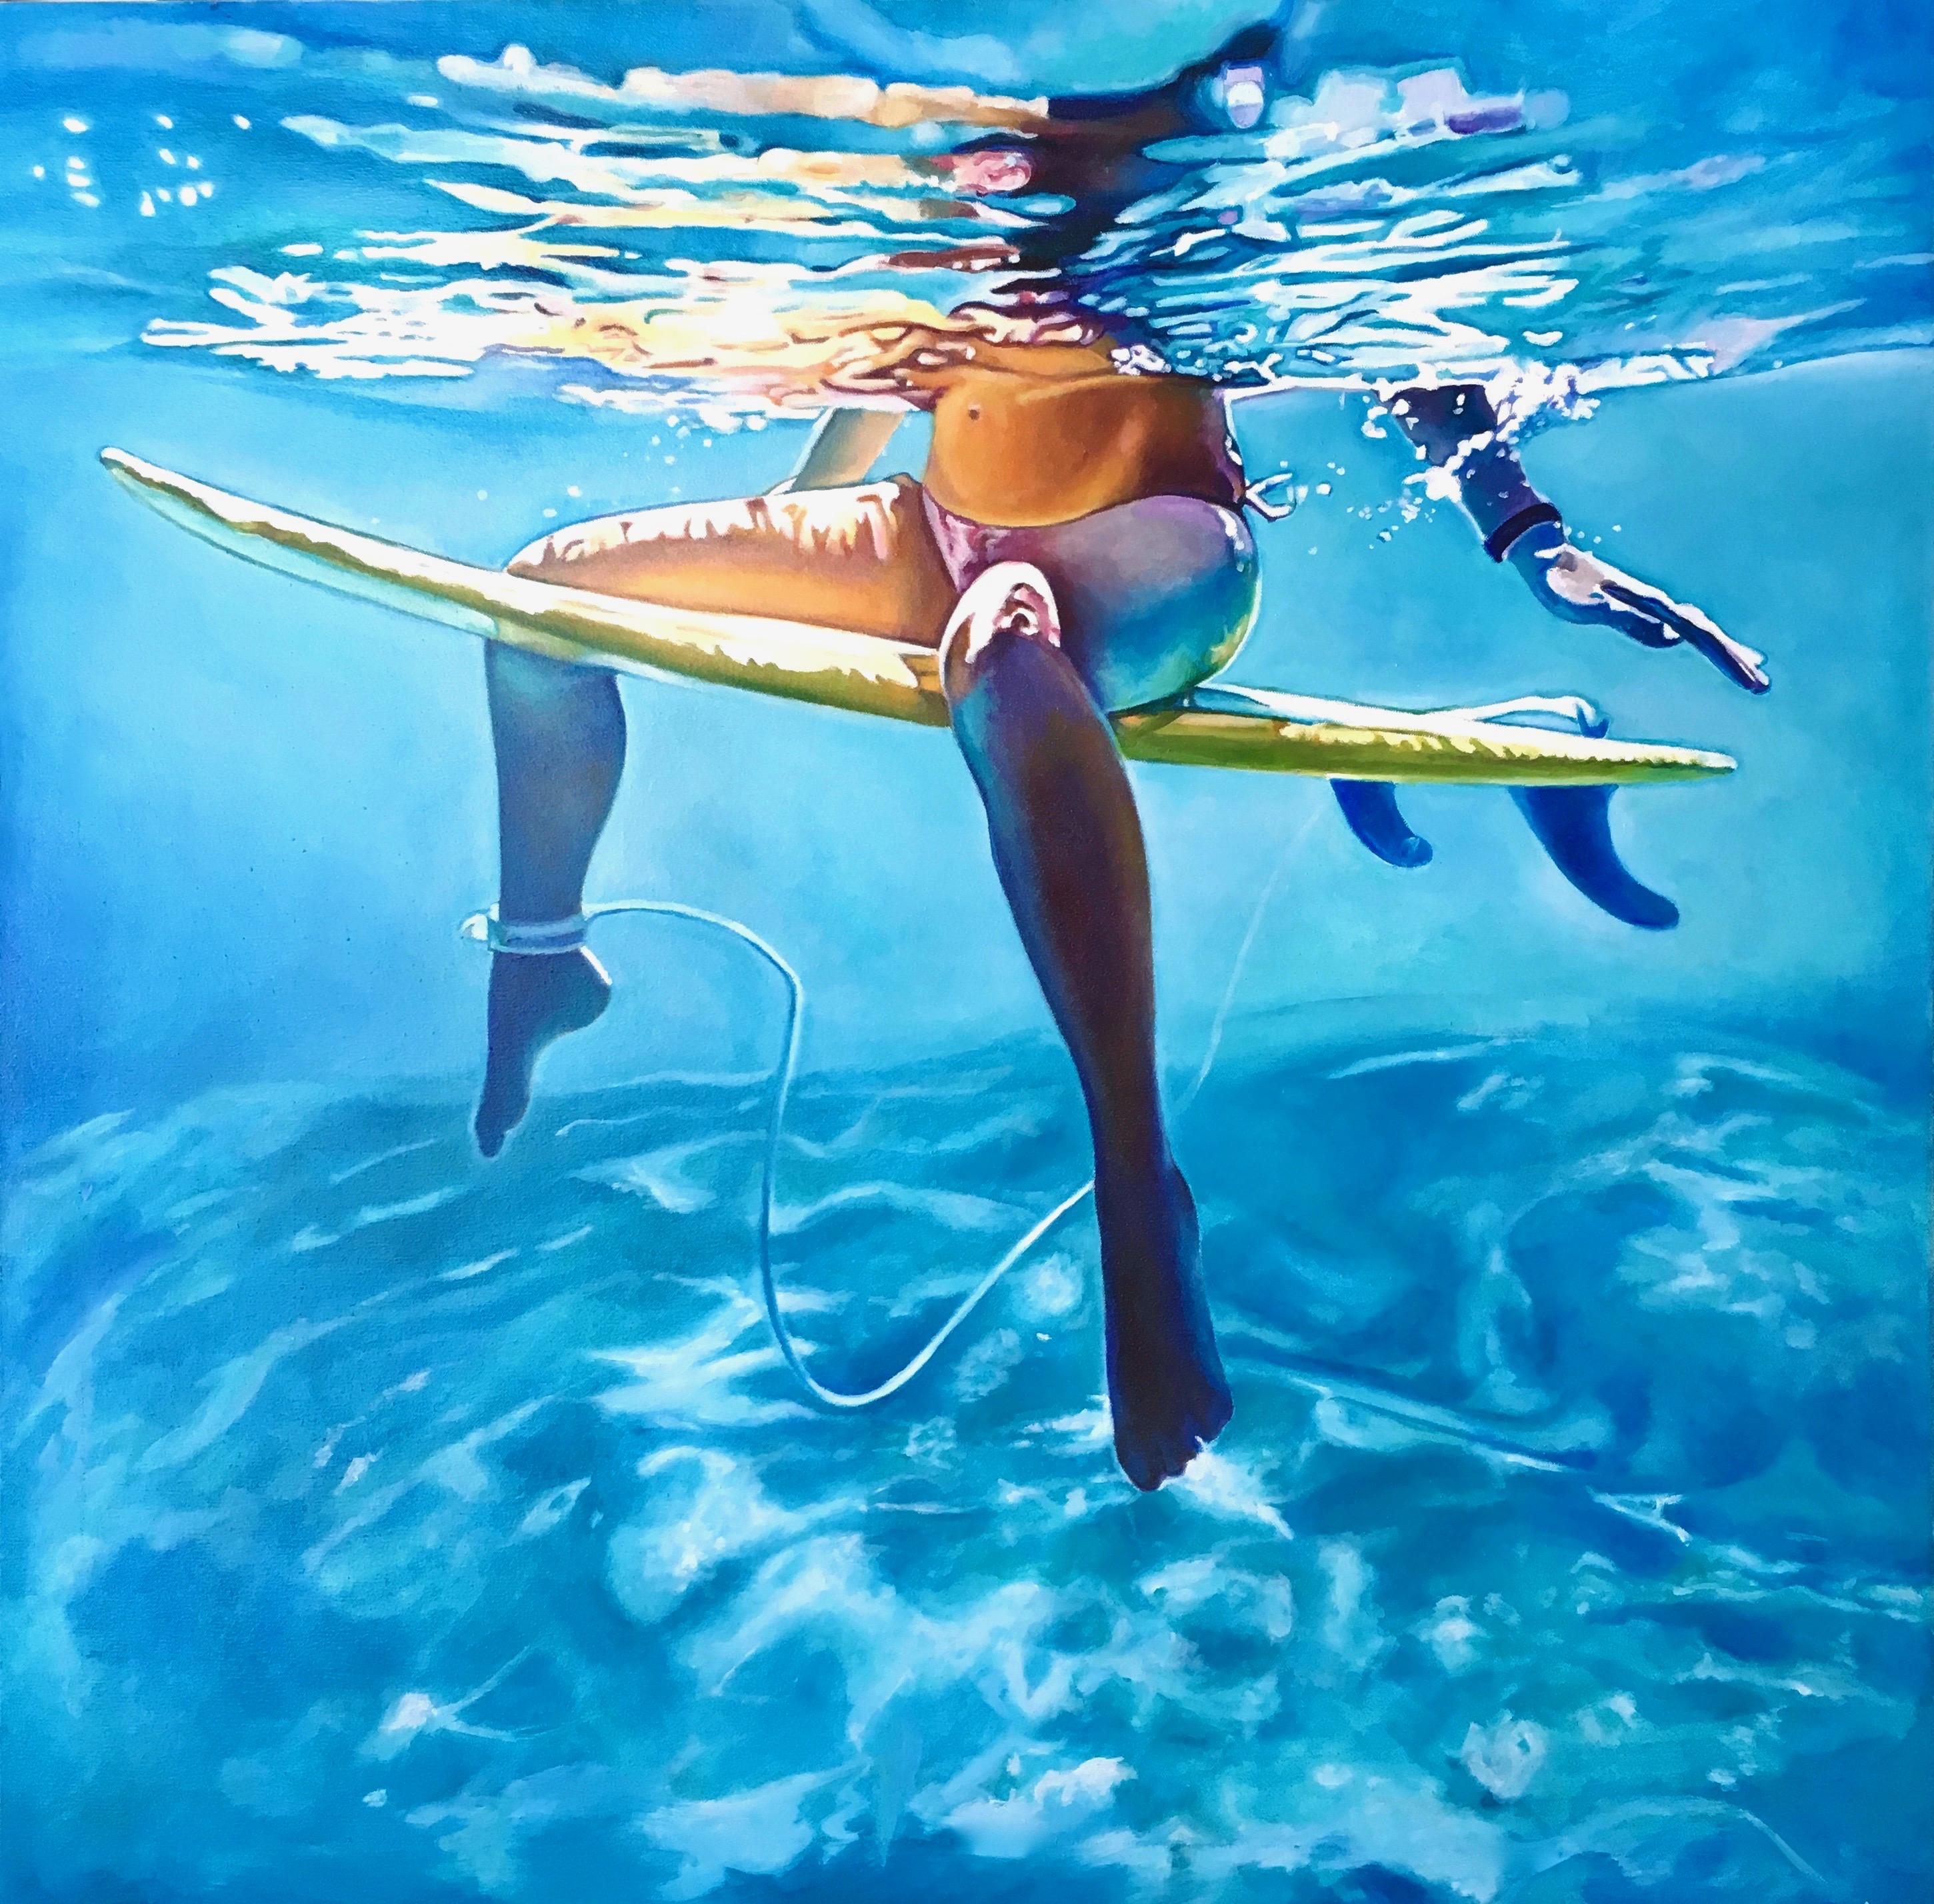 Megan Eisenberg Figurative Painting - "Submerged" Original Oil Painting 36 in x 36 in